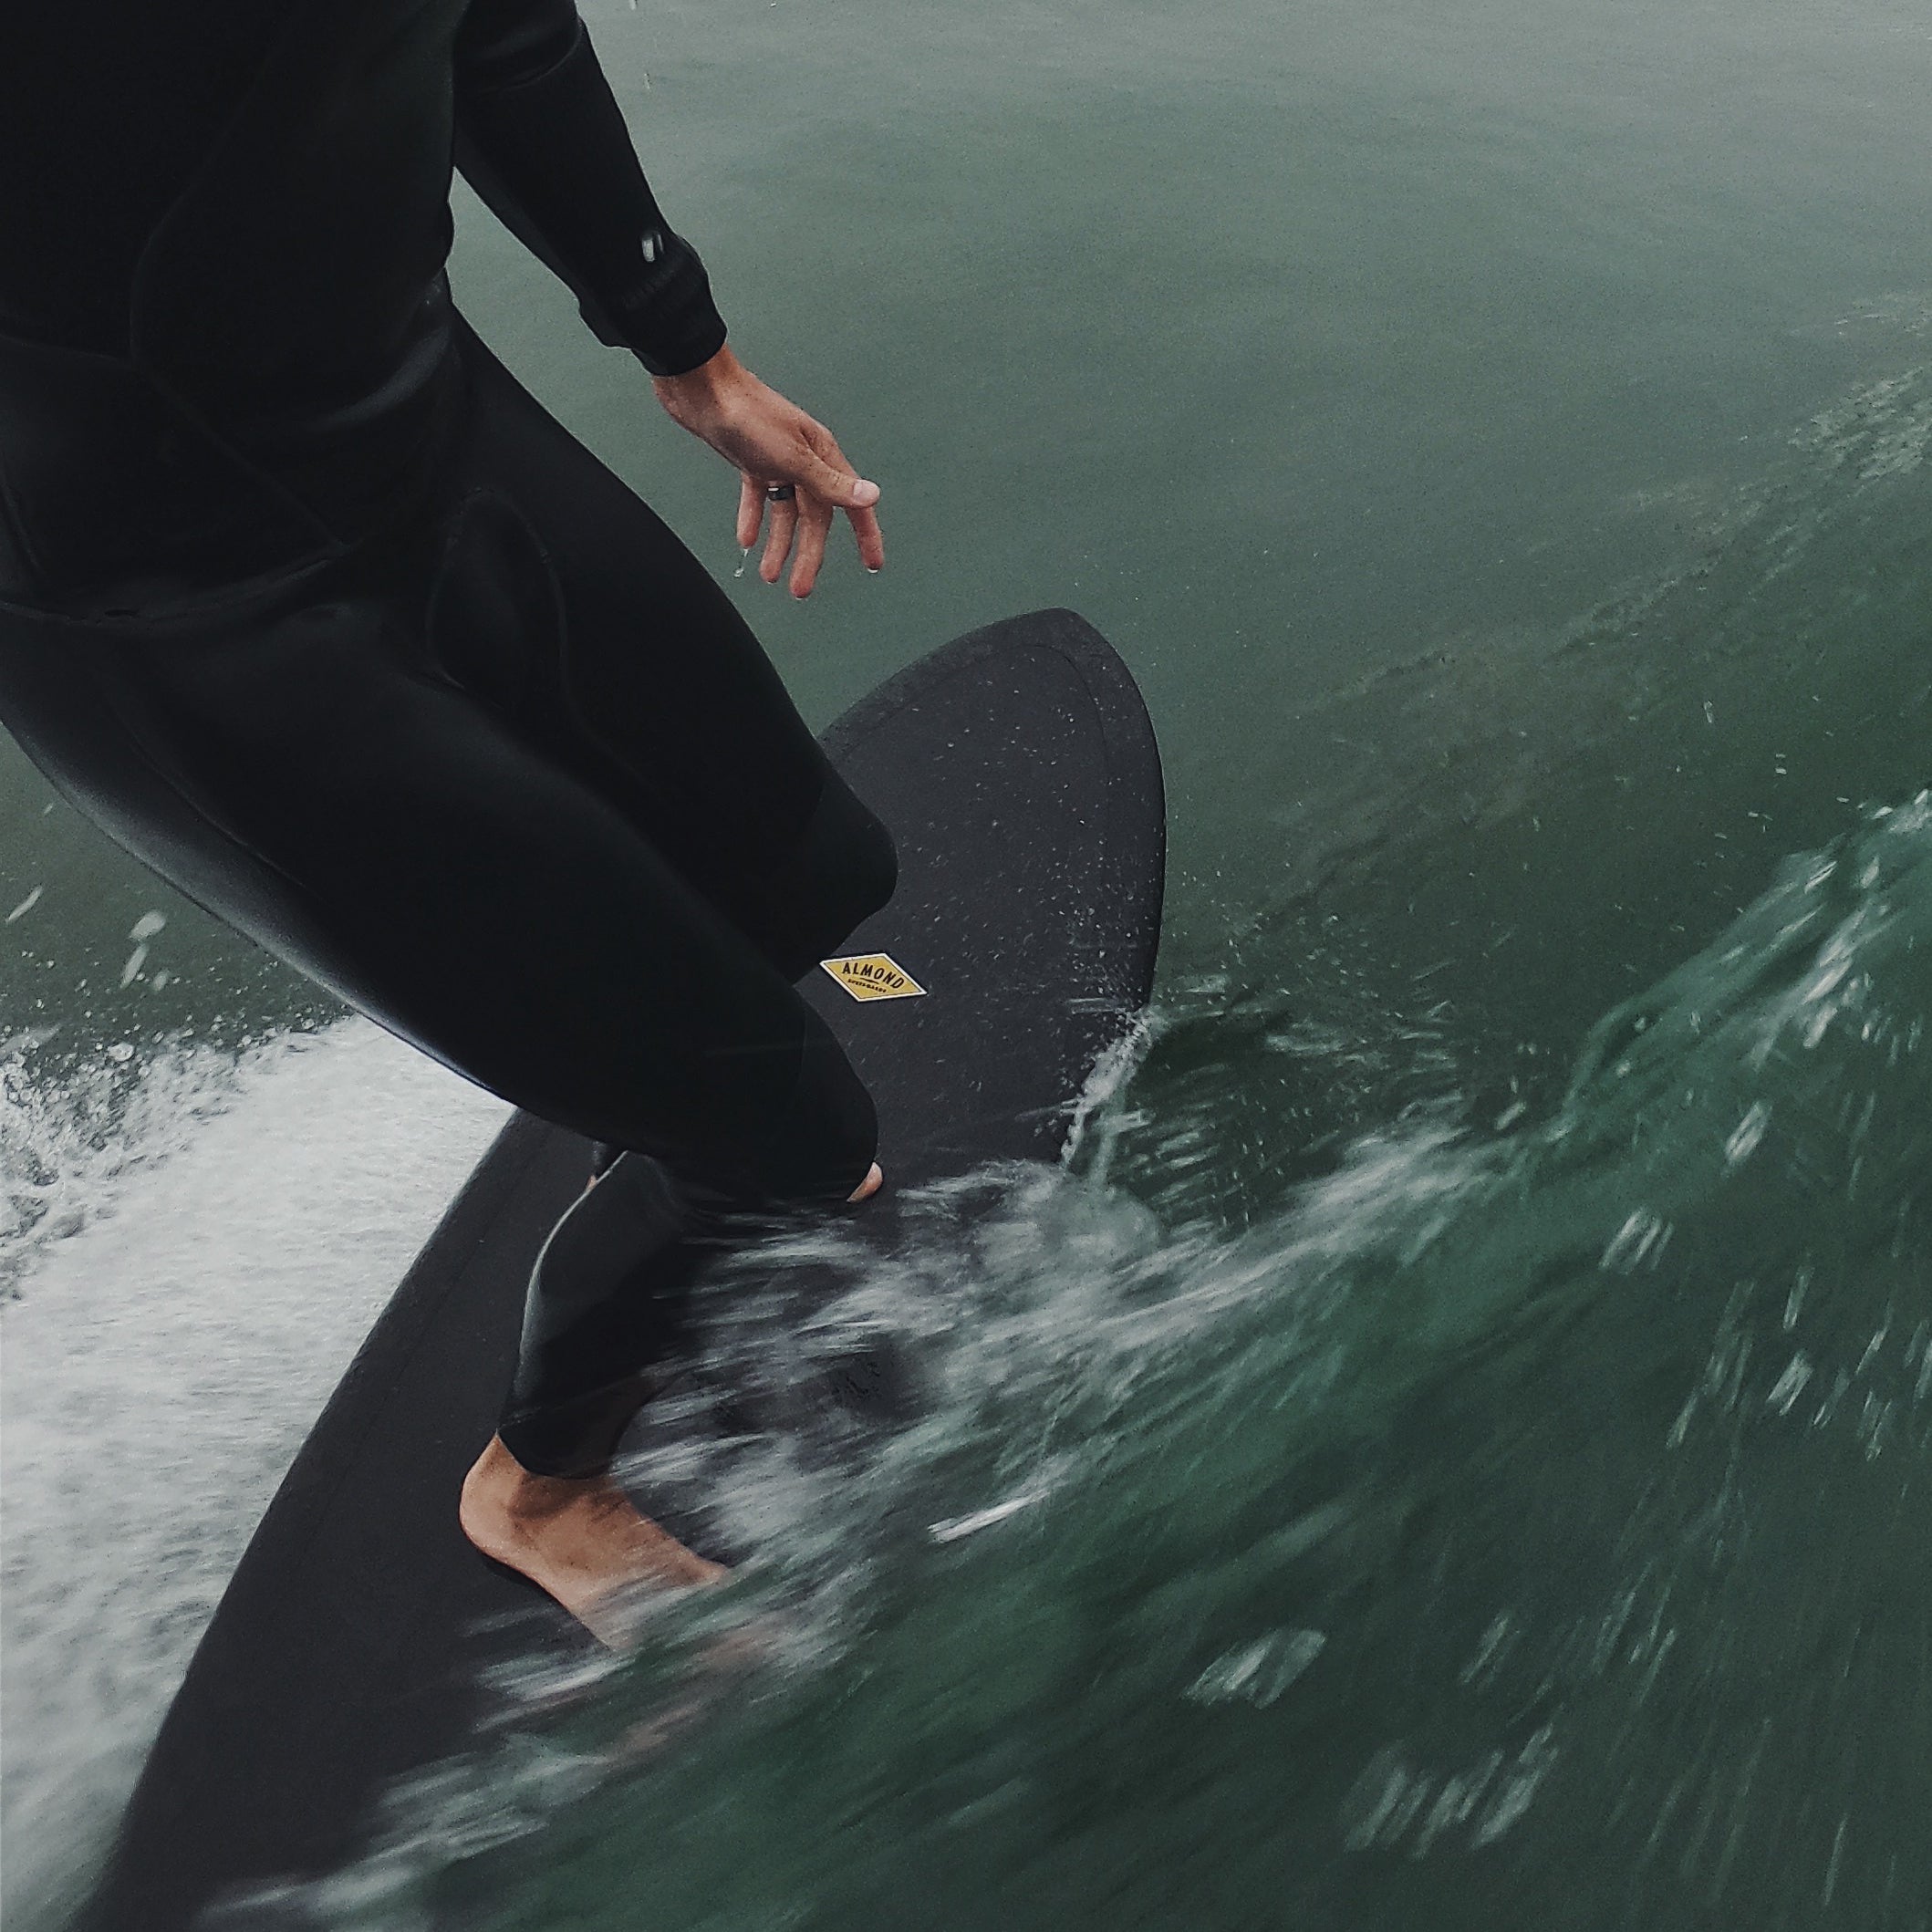 Man surfing a wave on a black 6 foot 4 inch Almond Plez Phez surfboard